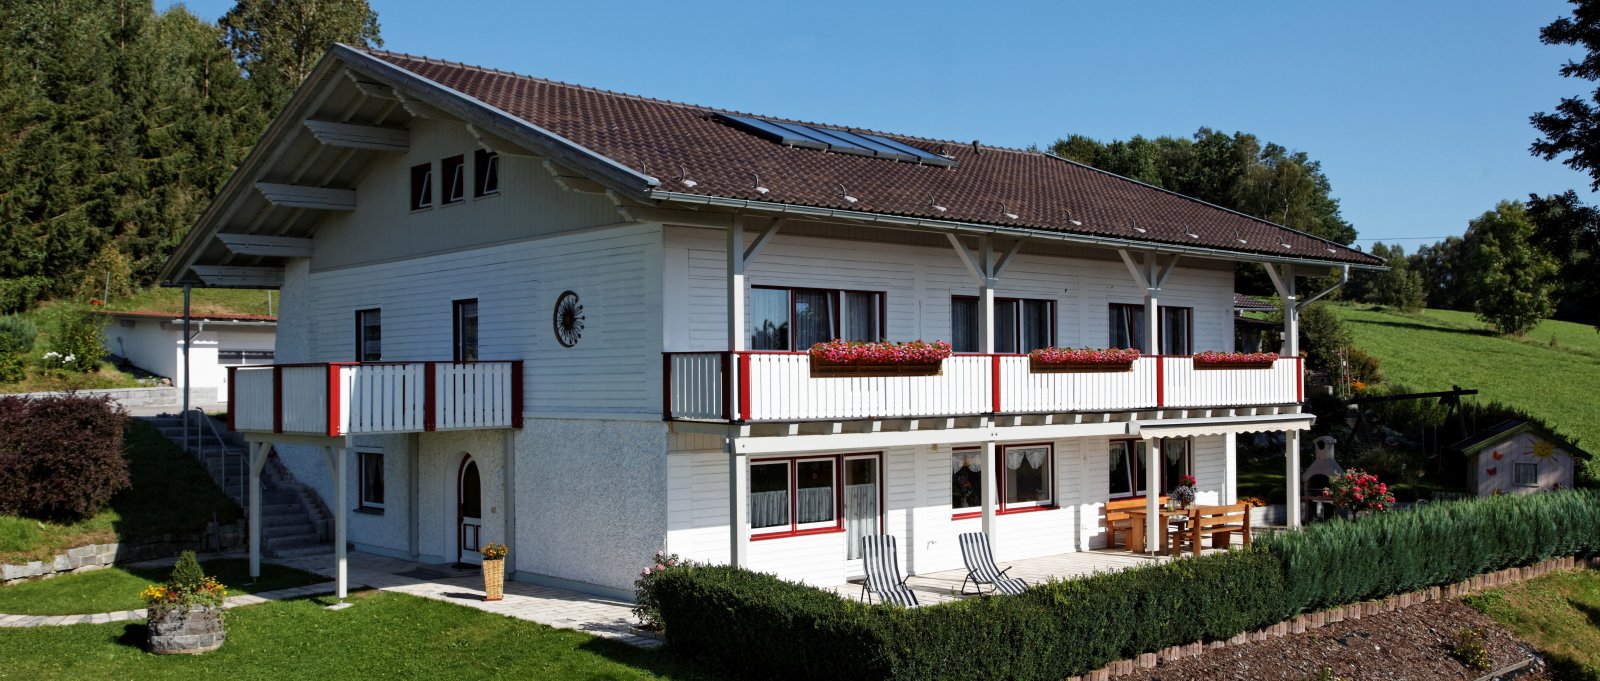 Ferienhaus Panorama in Kaikenried – Kontakt